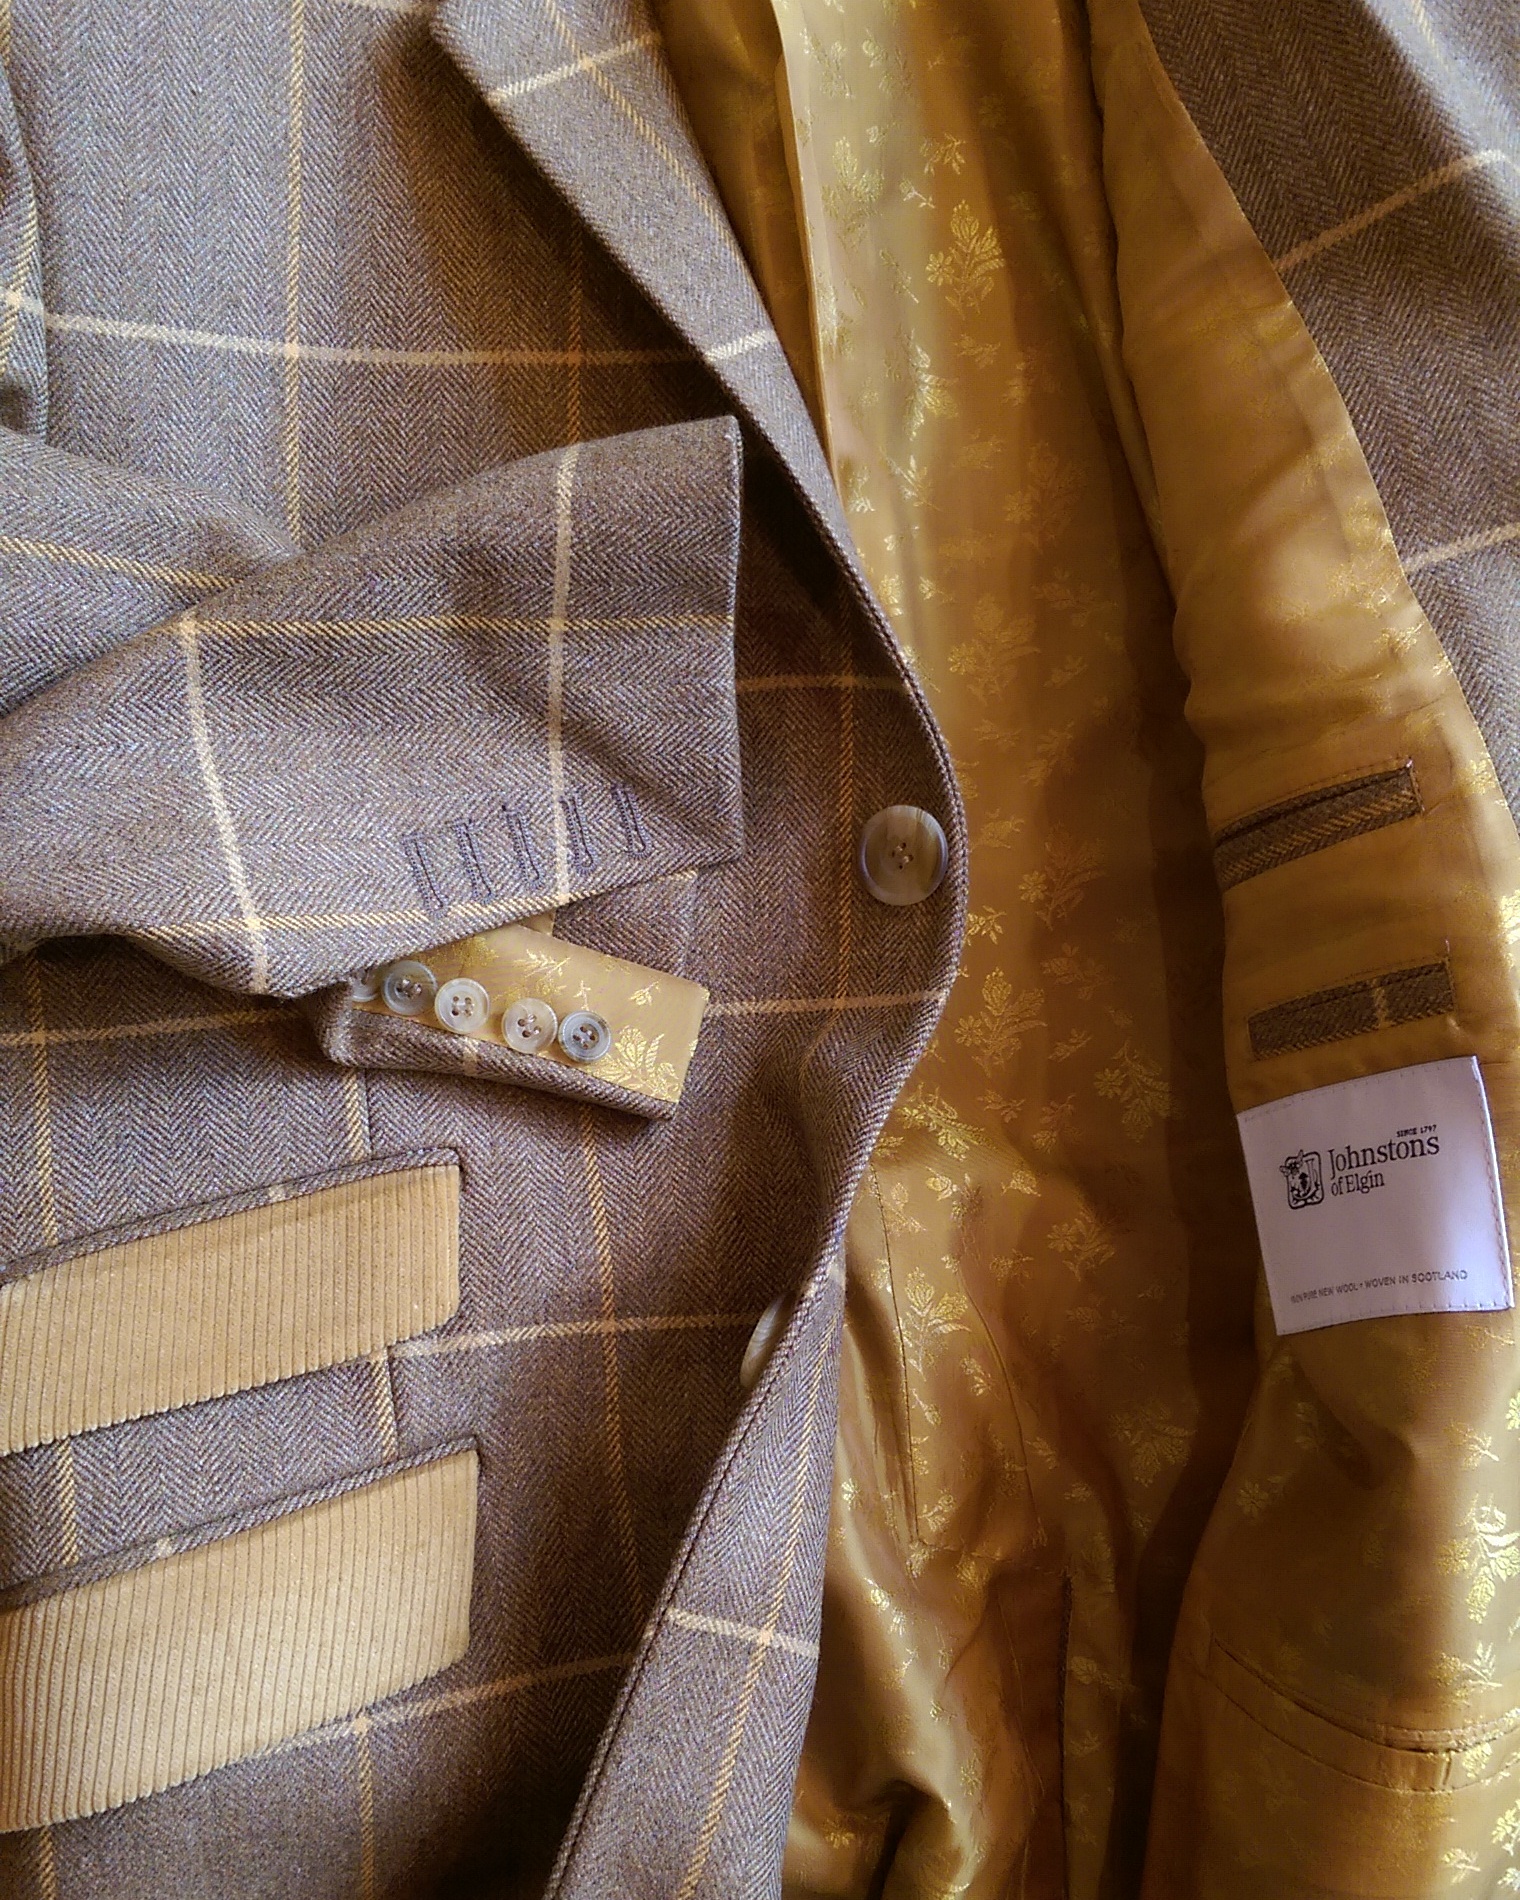 bespoke-all-uk-made-british-coat-overcoat-tweed-johnstons-of-elgin-cord-mustard-paisley-lining-cuff-detail-horn-buttons.jpg